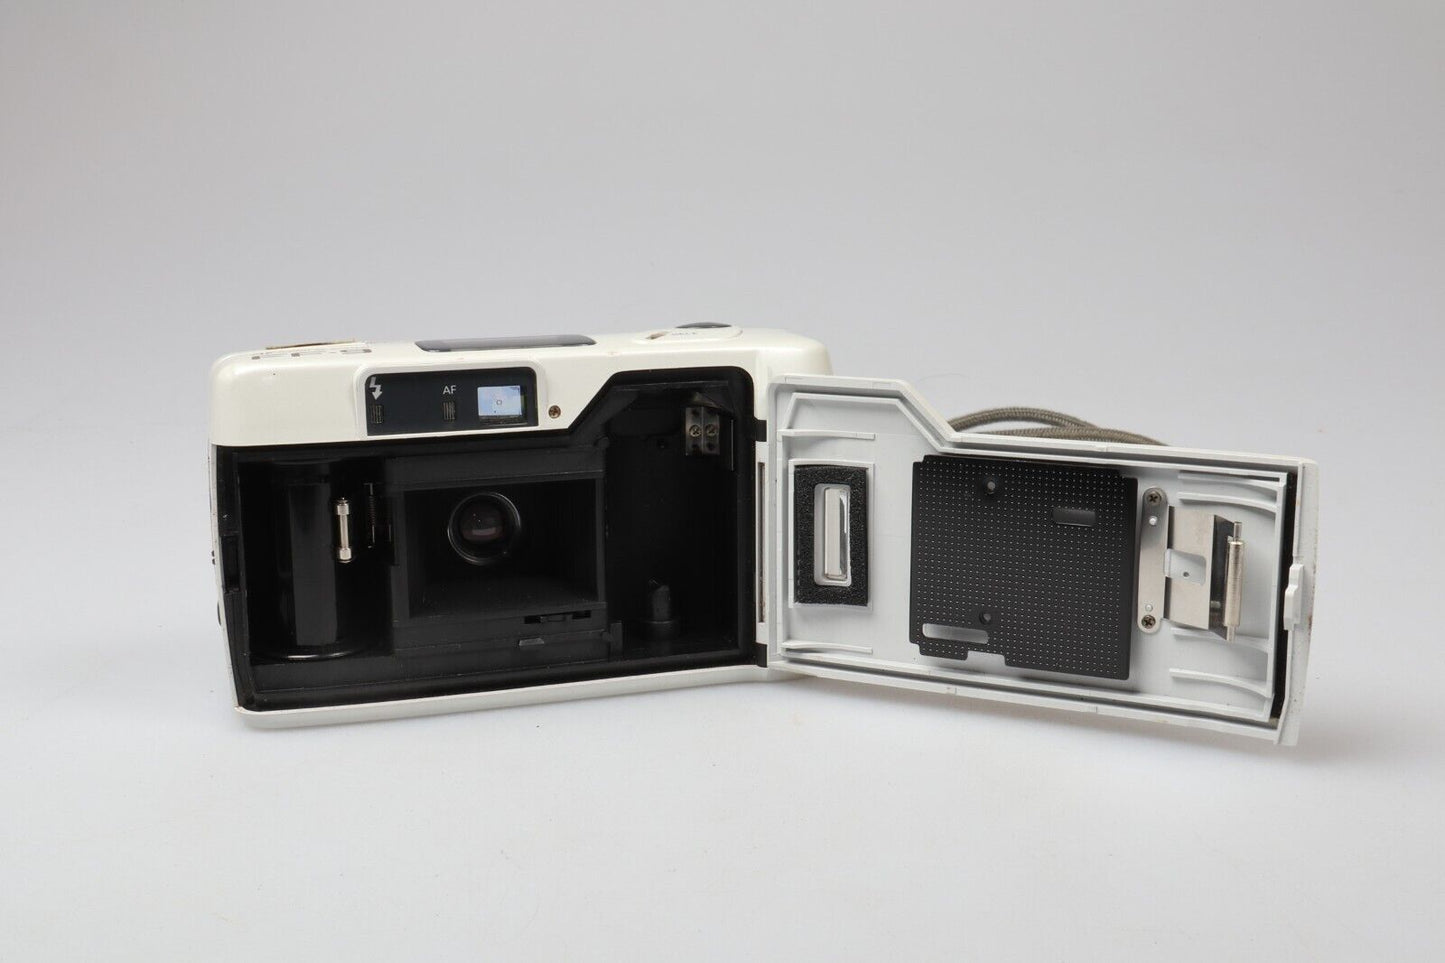 Ricoh FF-9 | 35mm Point & Shoot Film Camera | White